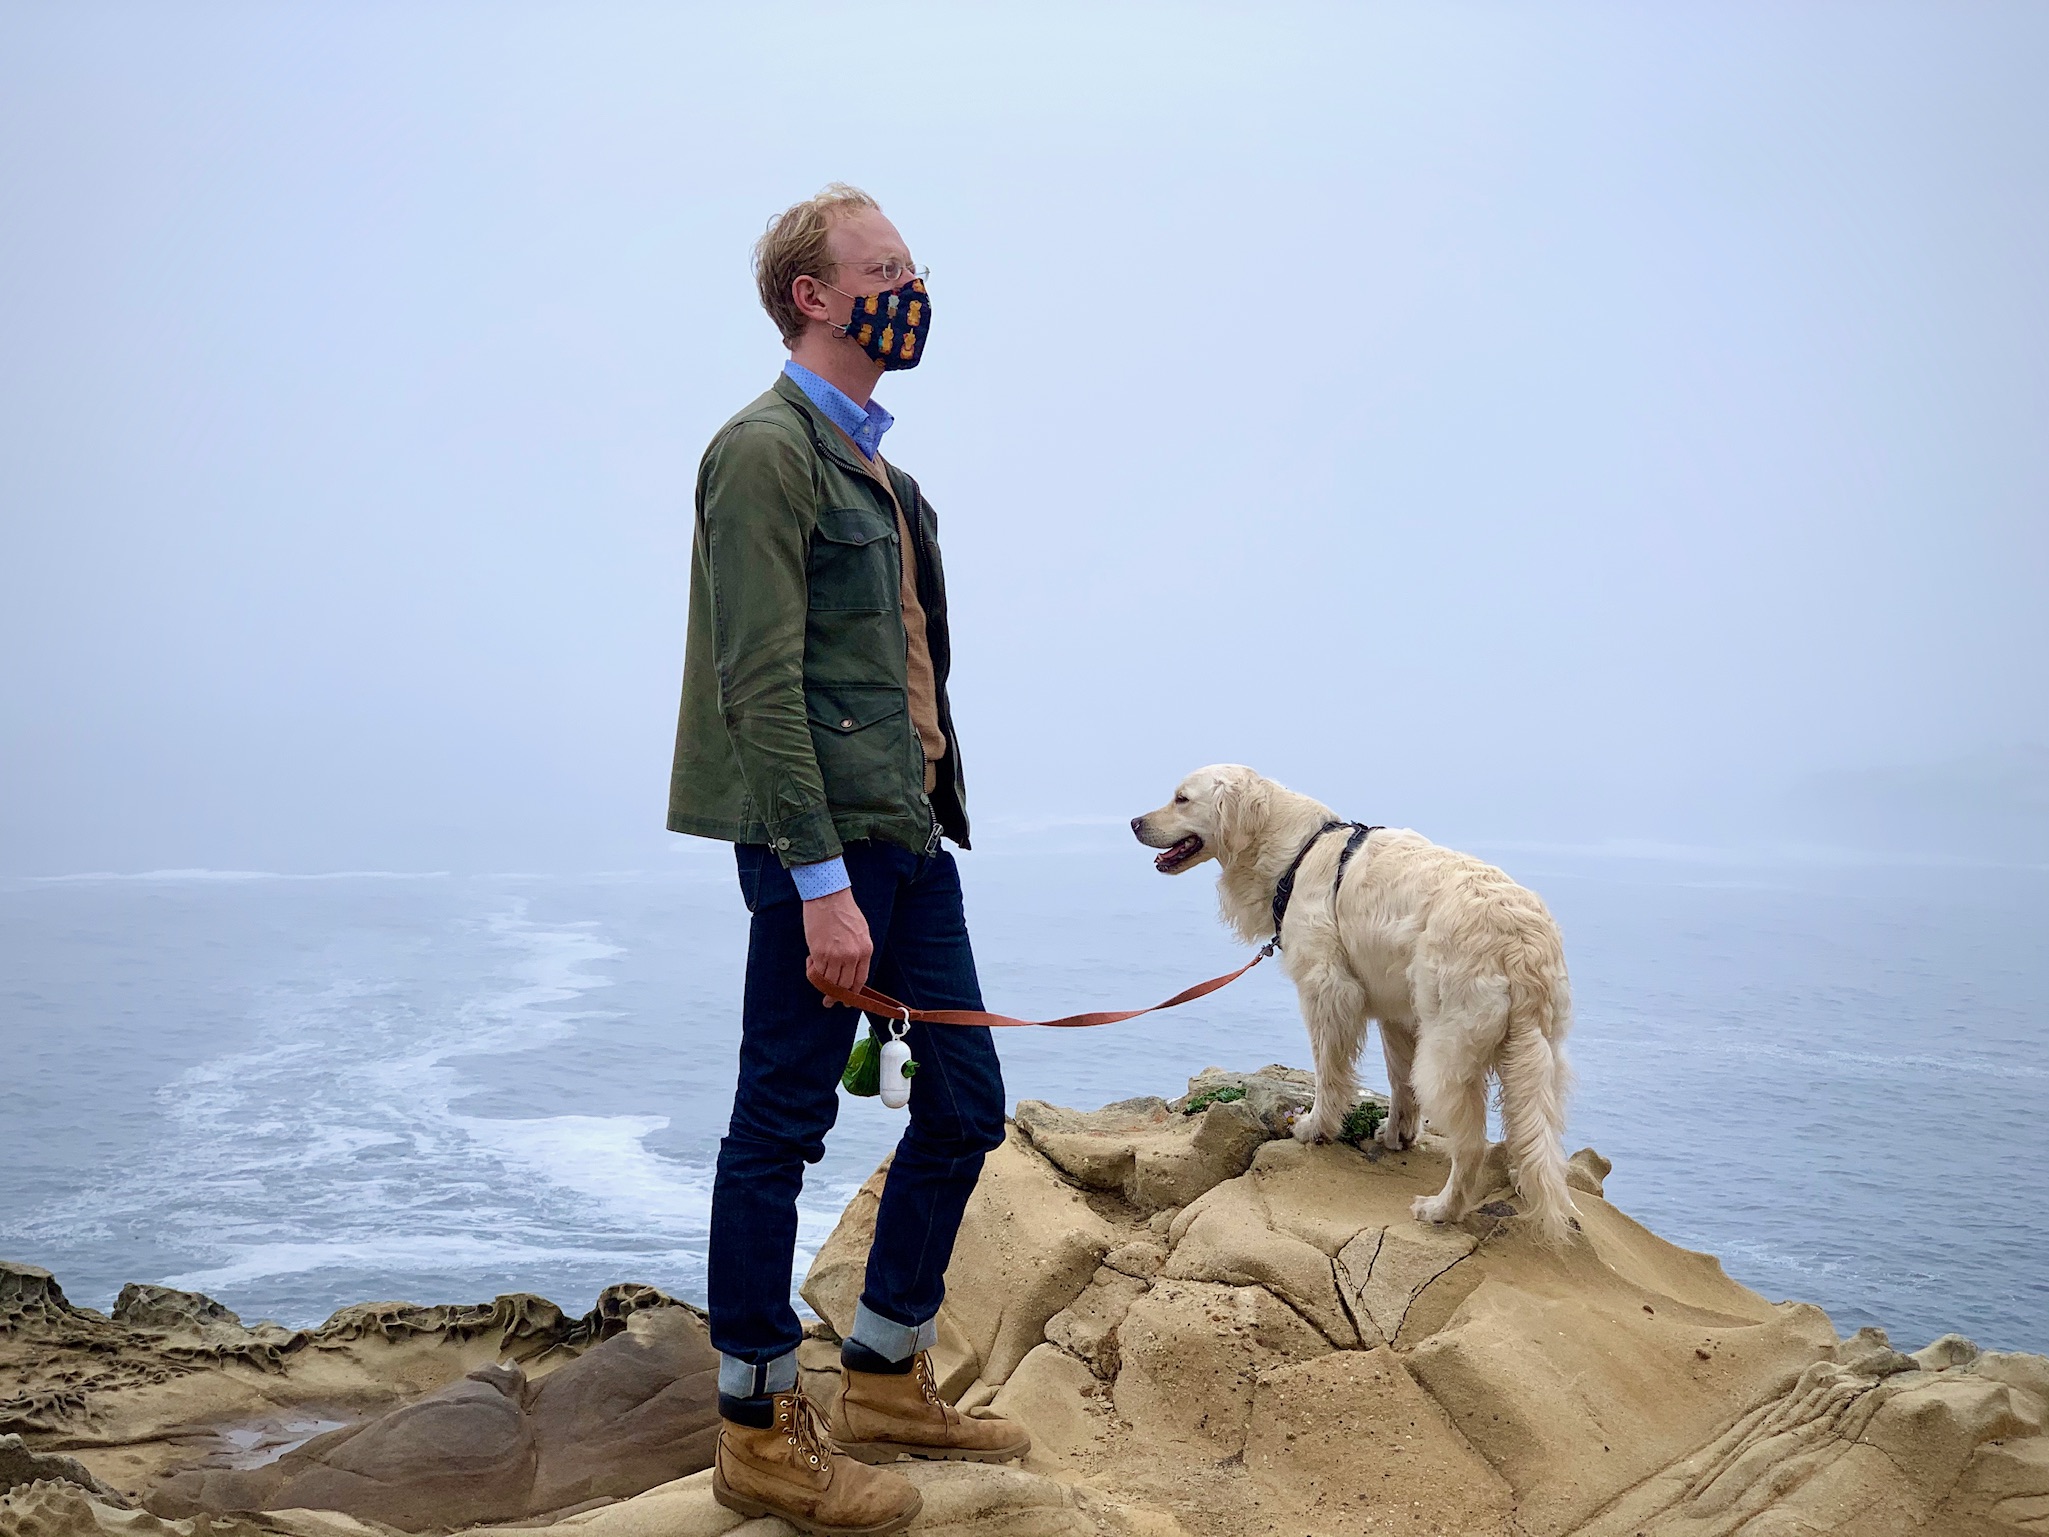 Andy and his dog Shabu on a walk. Image from Andy Matuschak.